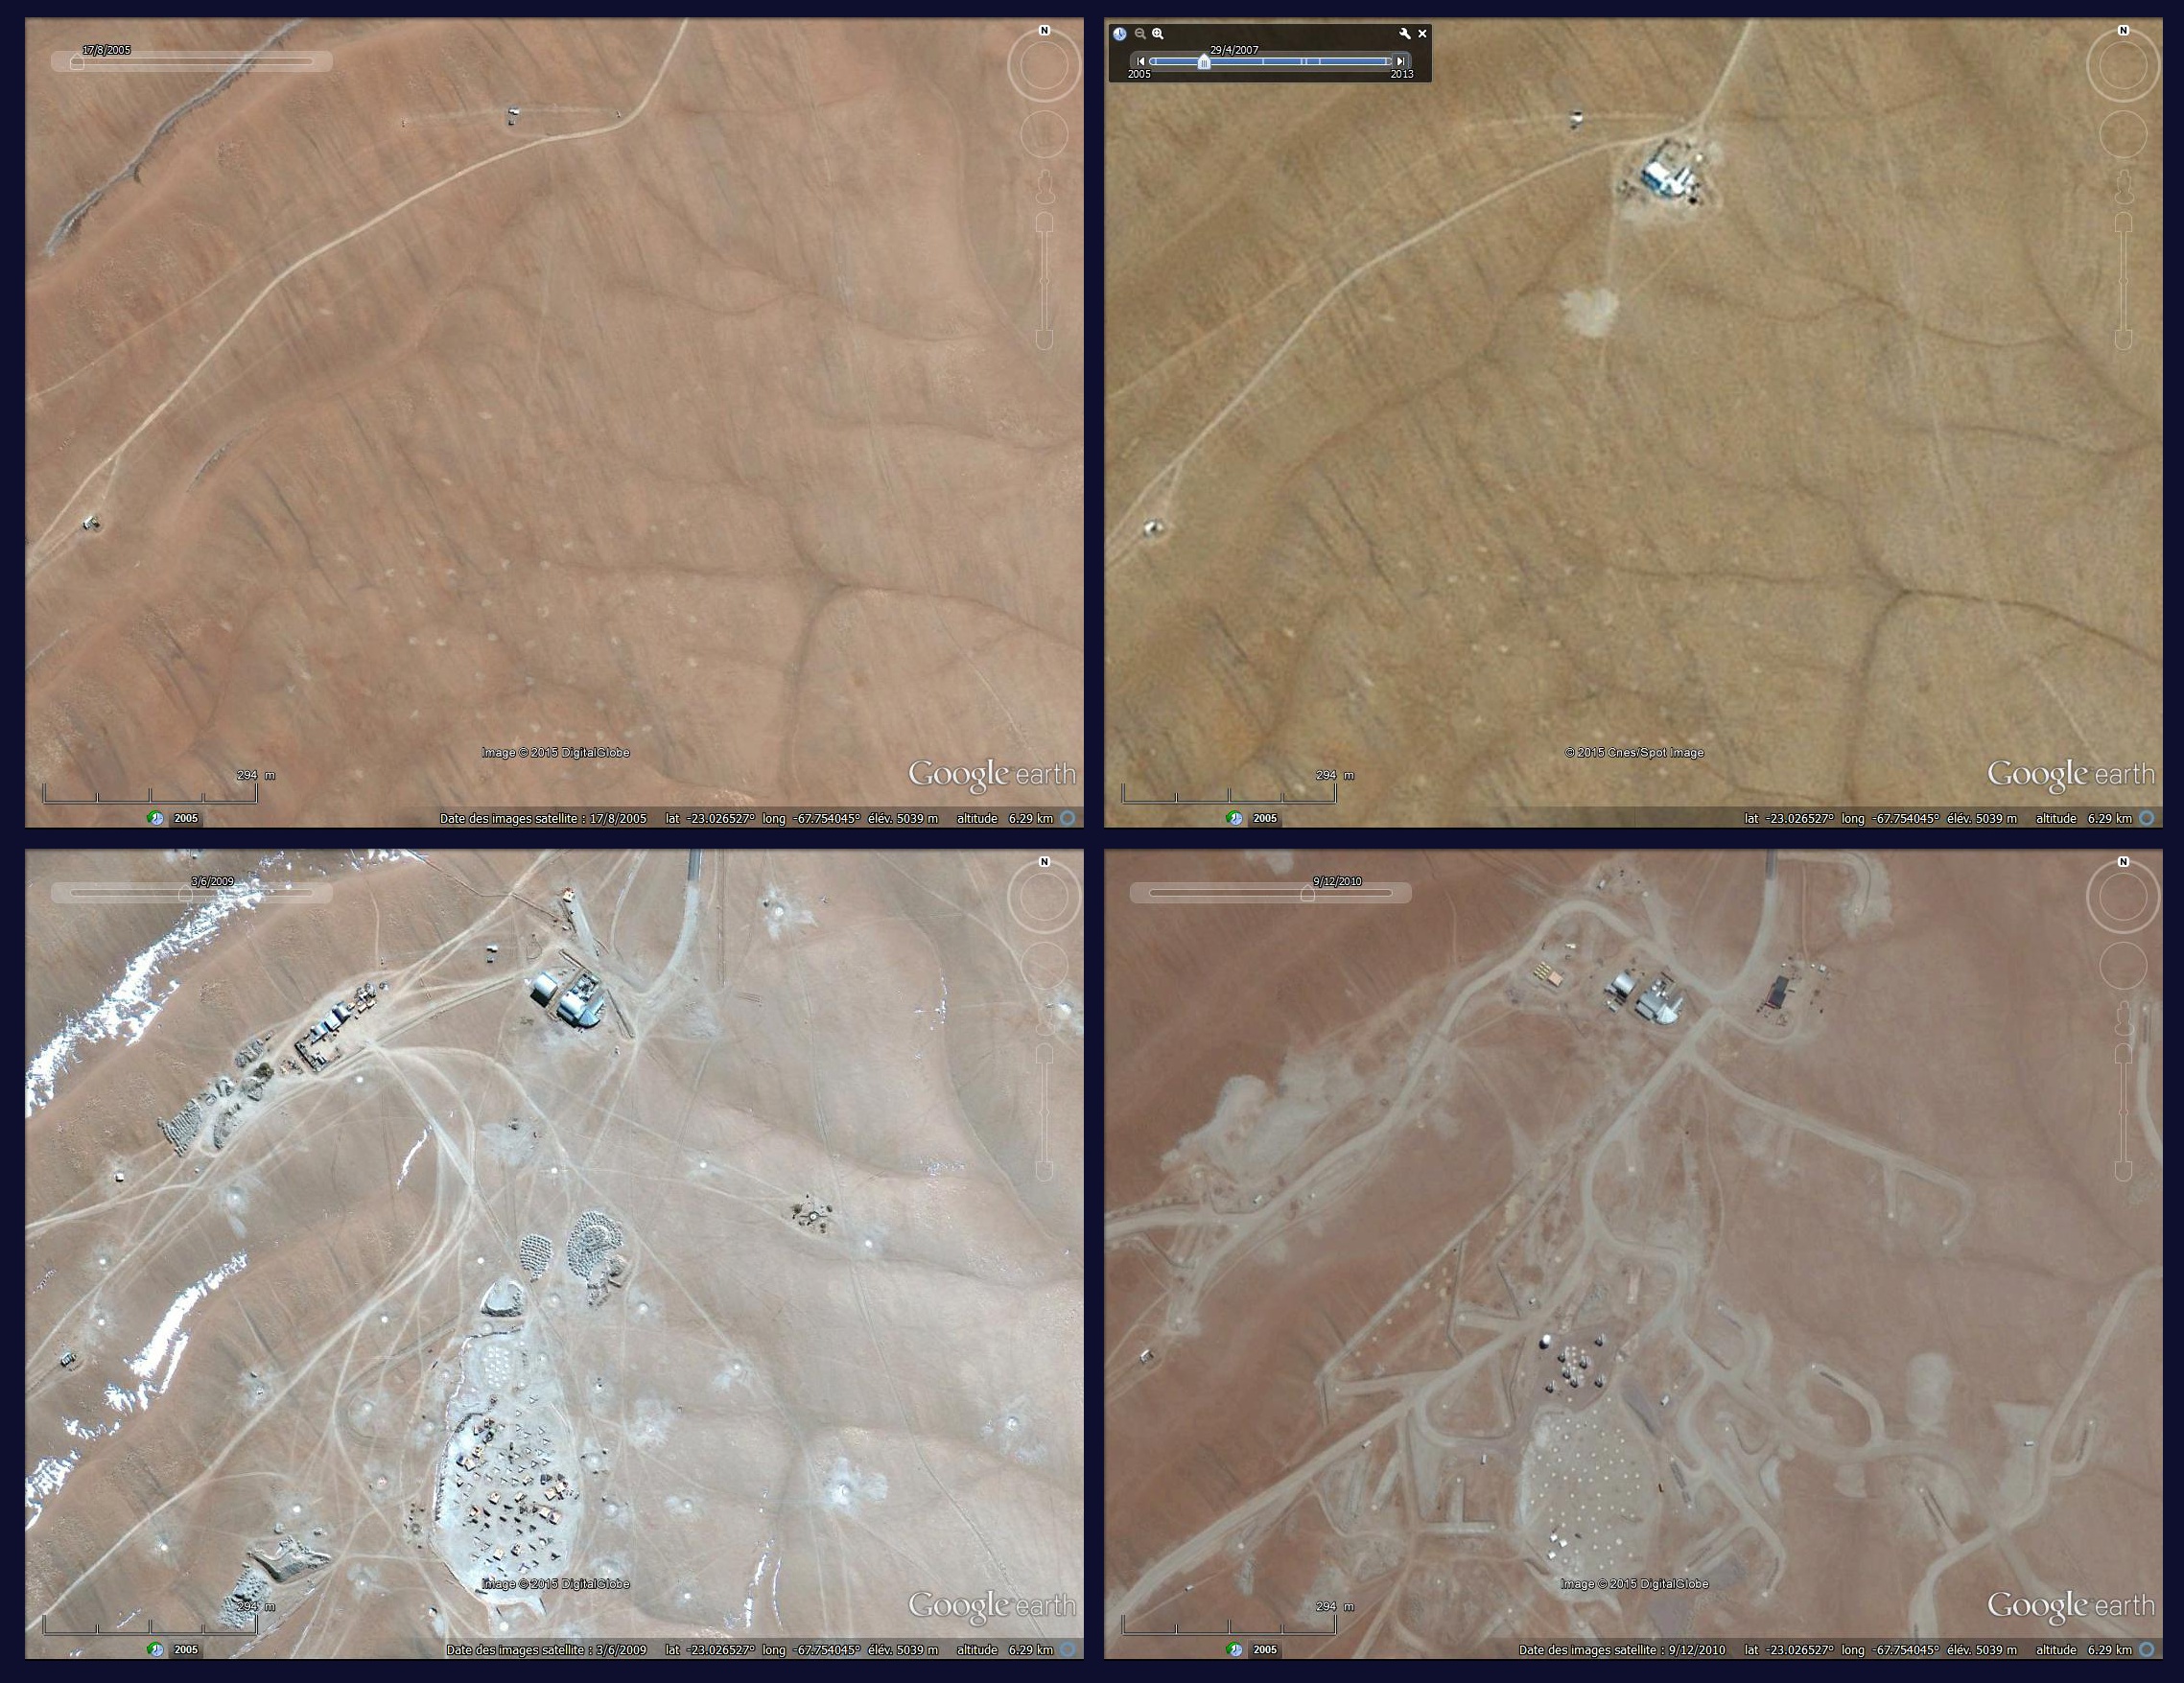 ALMA - ESO - Atacama Large Millimeter Array - évolution des travaux - 2005 - 2007 - 2009 - 2010 - 2015 - Google Earth